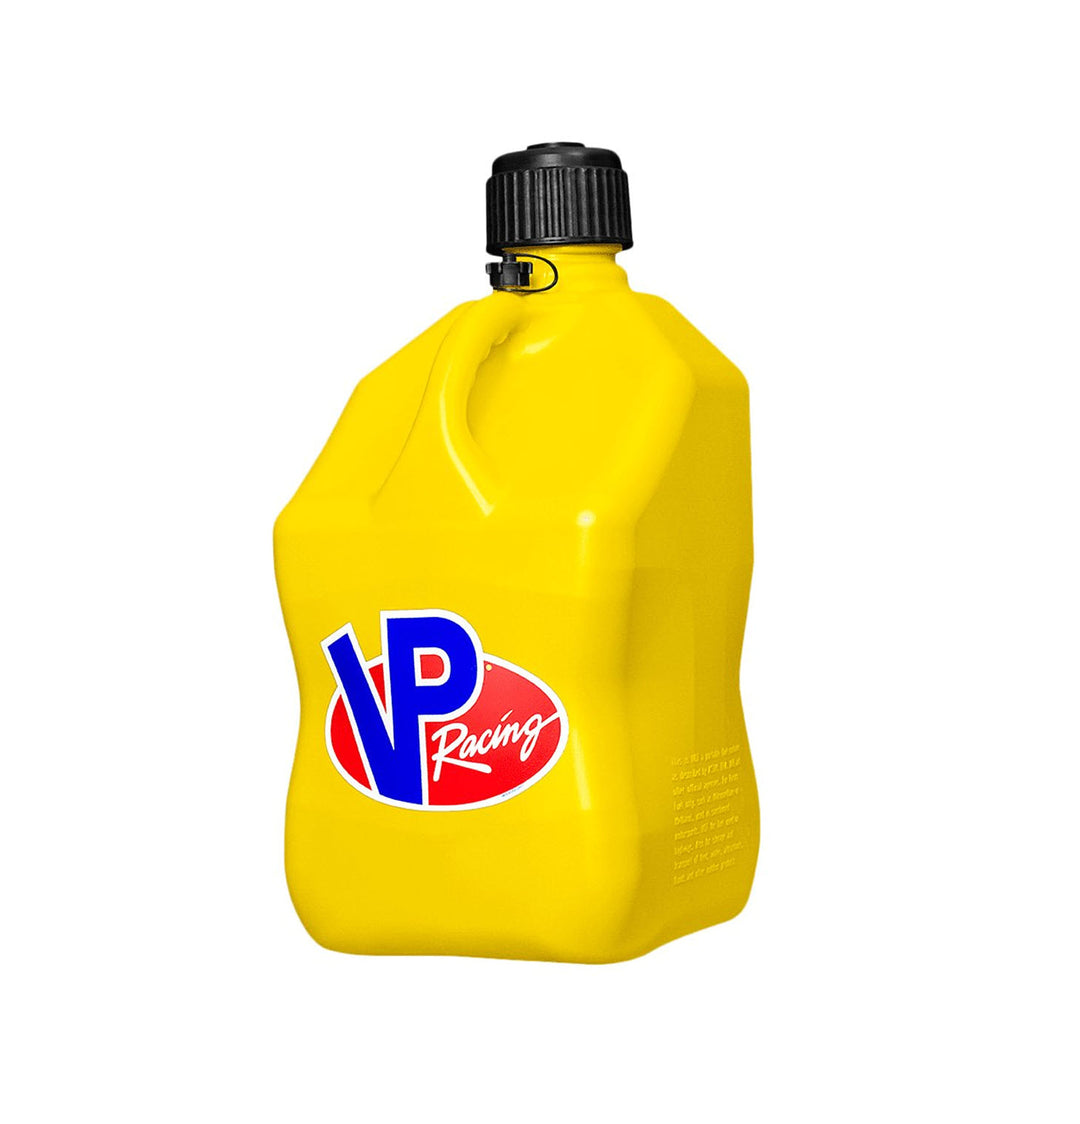 VP Racing 5.5-Gallon Motorsport Container - Yellow Jug, Black Cap - Dirty Racing Products